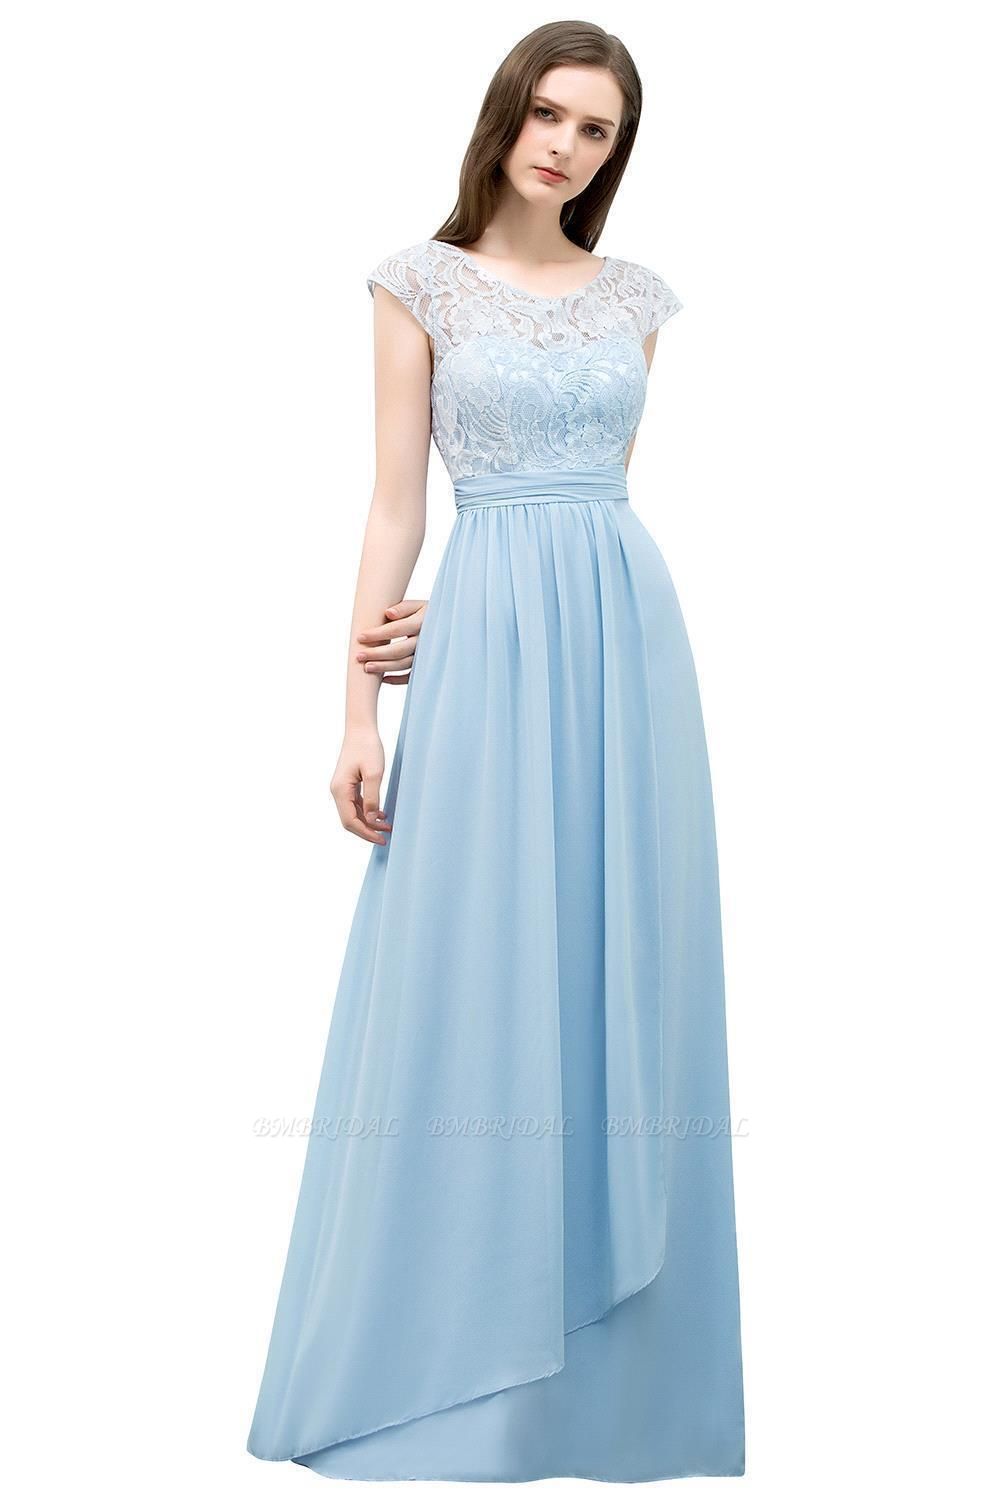 BMbridal A-line Long Cap Sleeves Lace Top Chiffon Bridesmaid Dress